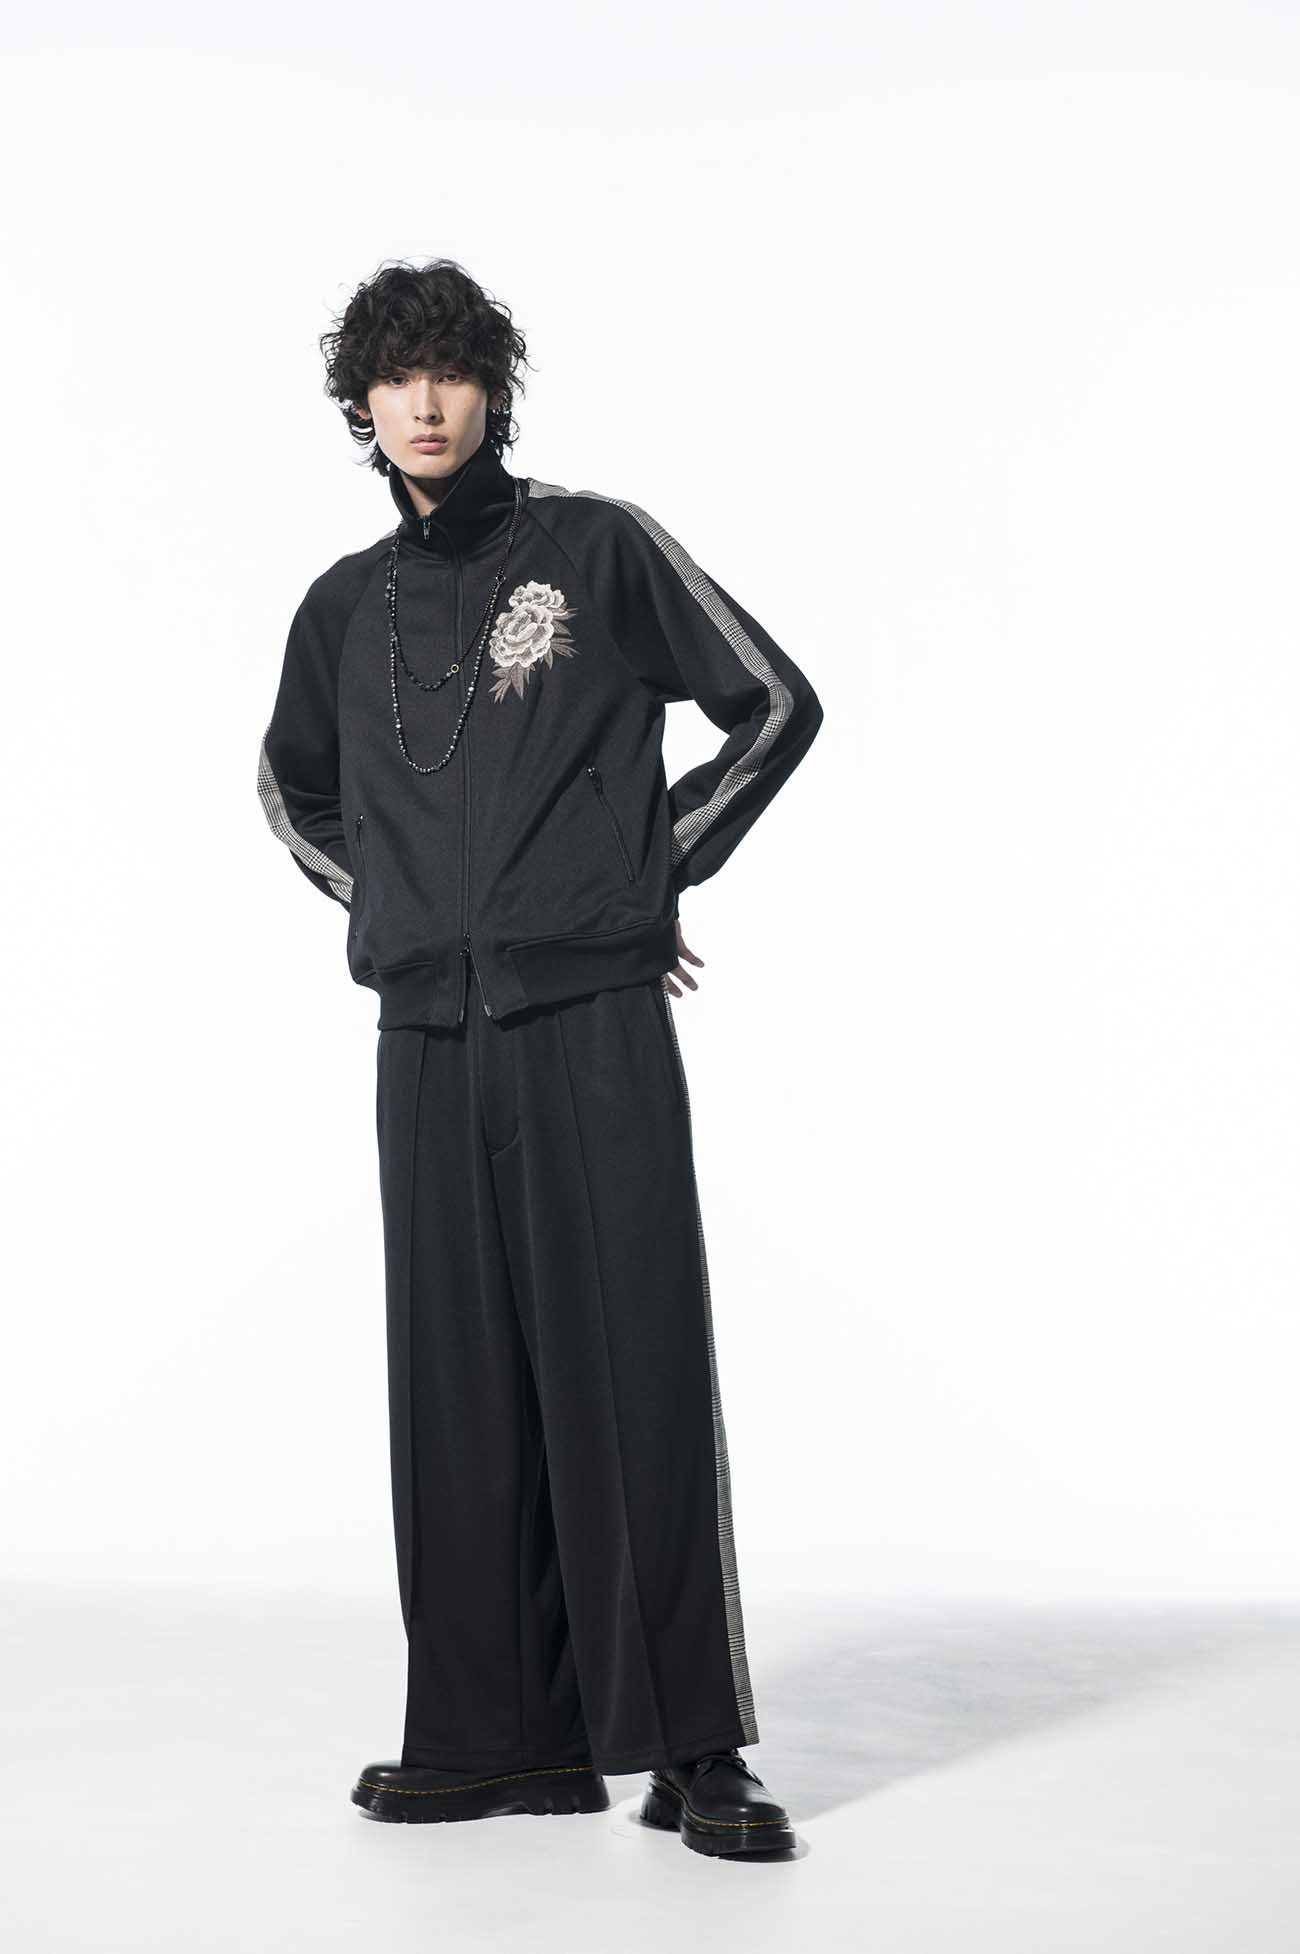 Pe/Smooth Jersey Peony Flower Embroidery Raglan Tweed Line Track Jacket <Black>